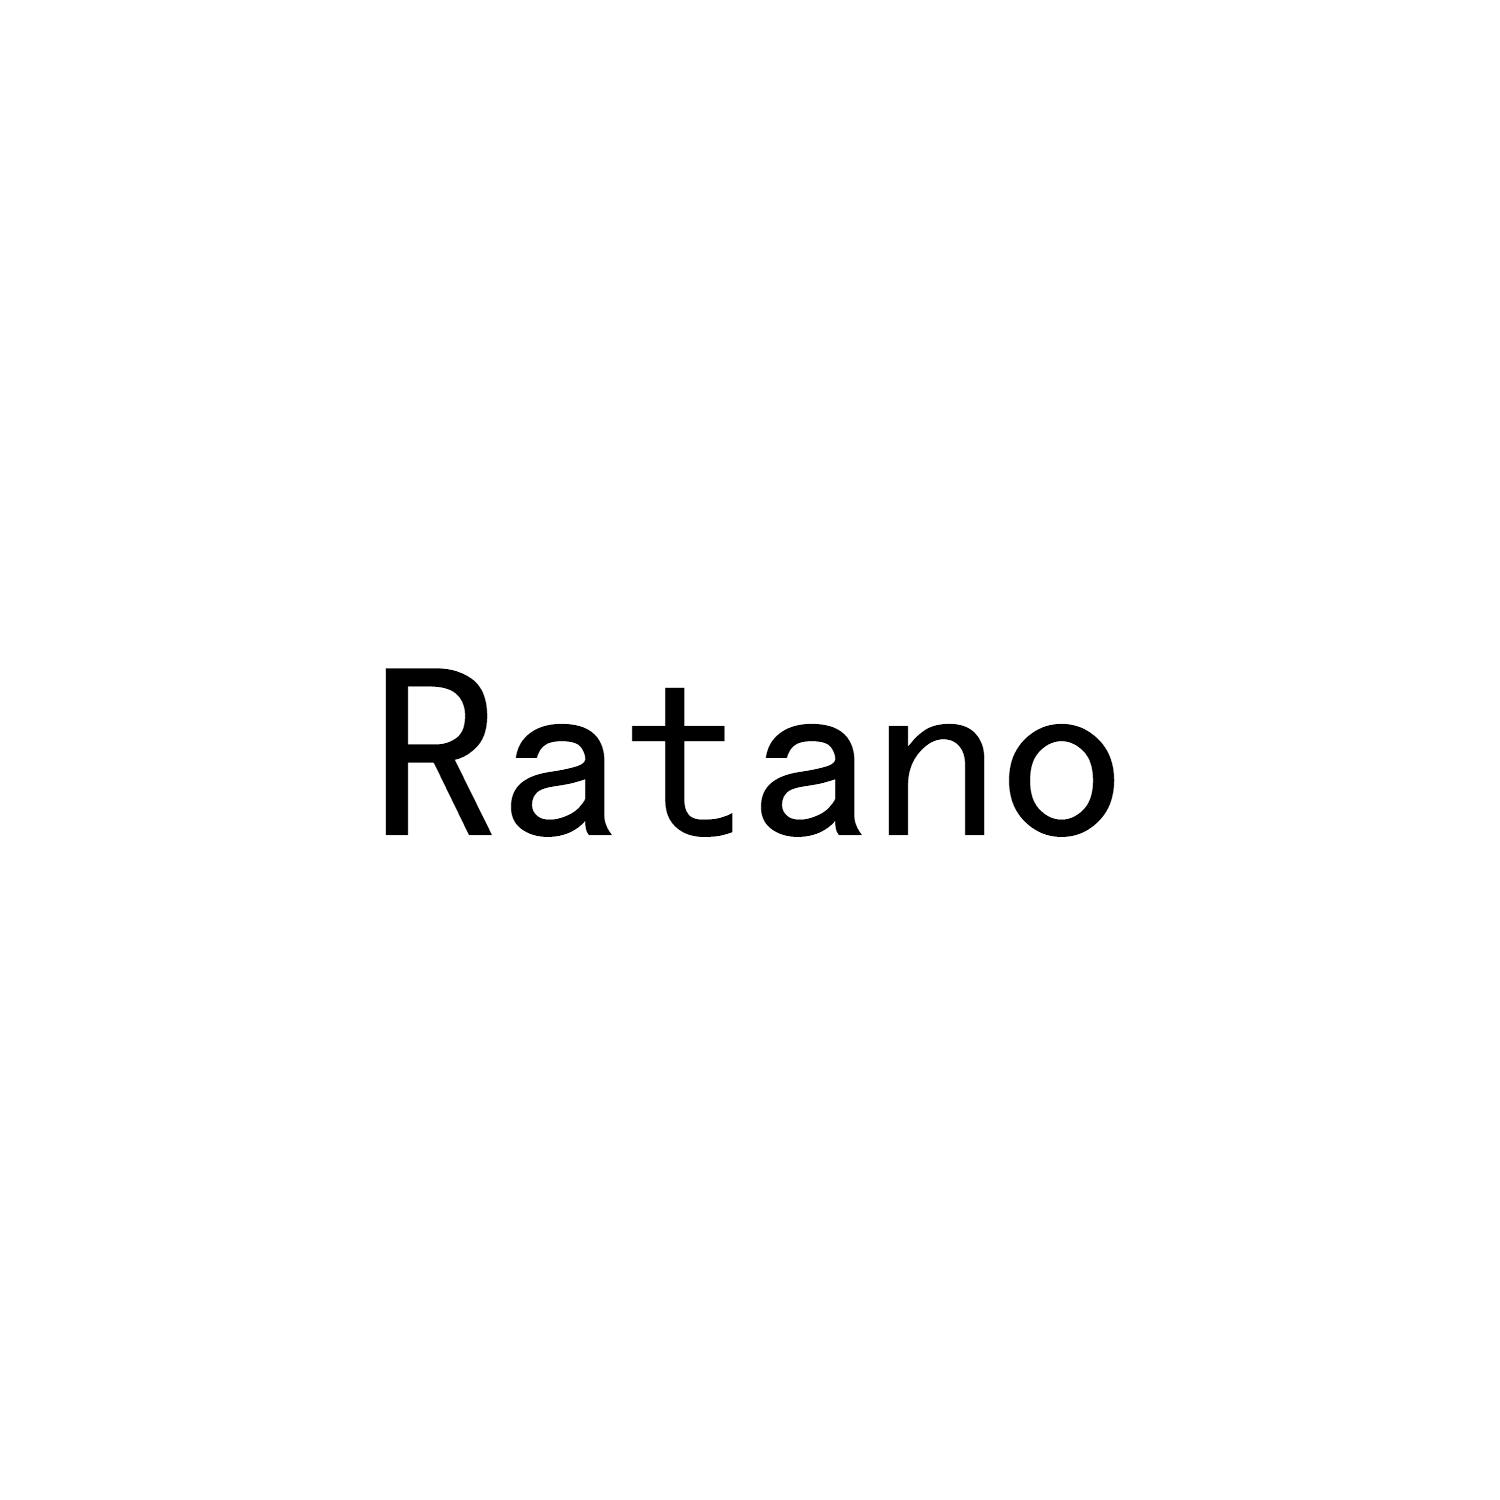 10类-医疗器械RATANO商标转让